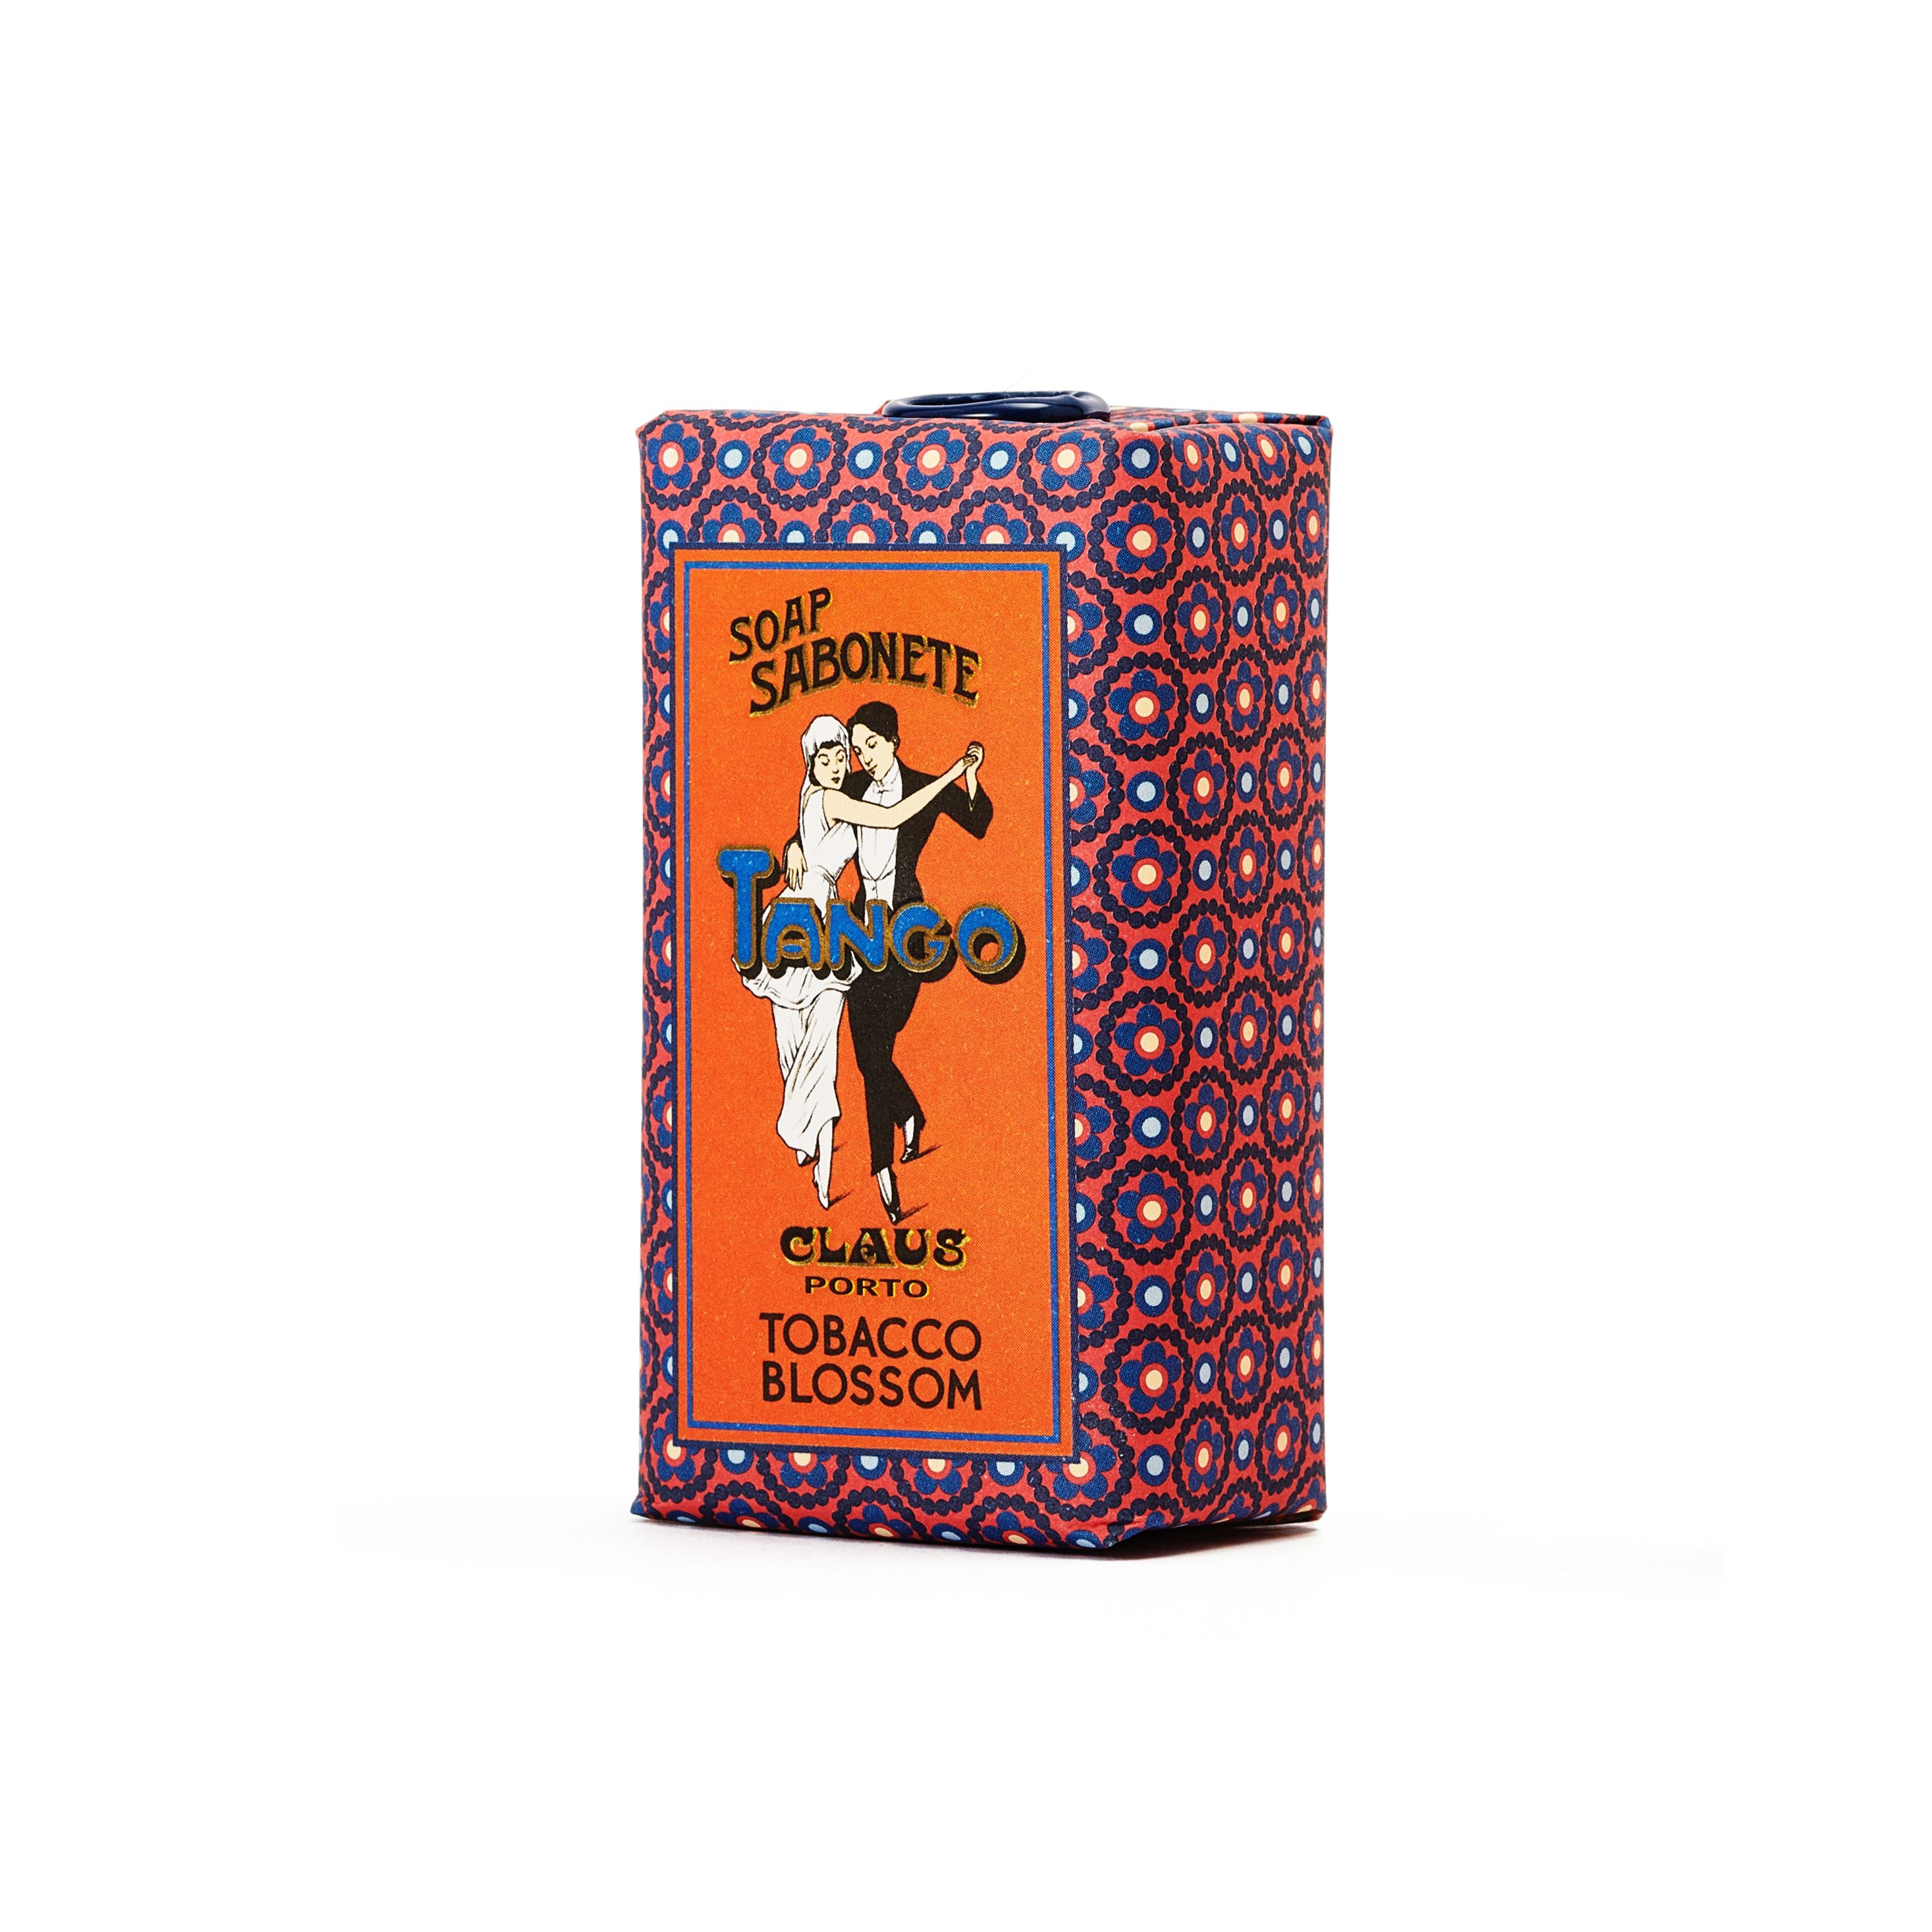 Claus Porto Tango Tobacco Blossom Wax Sealed Soap 150 g Seifen